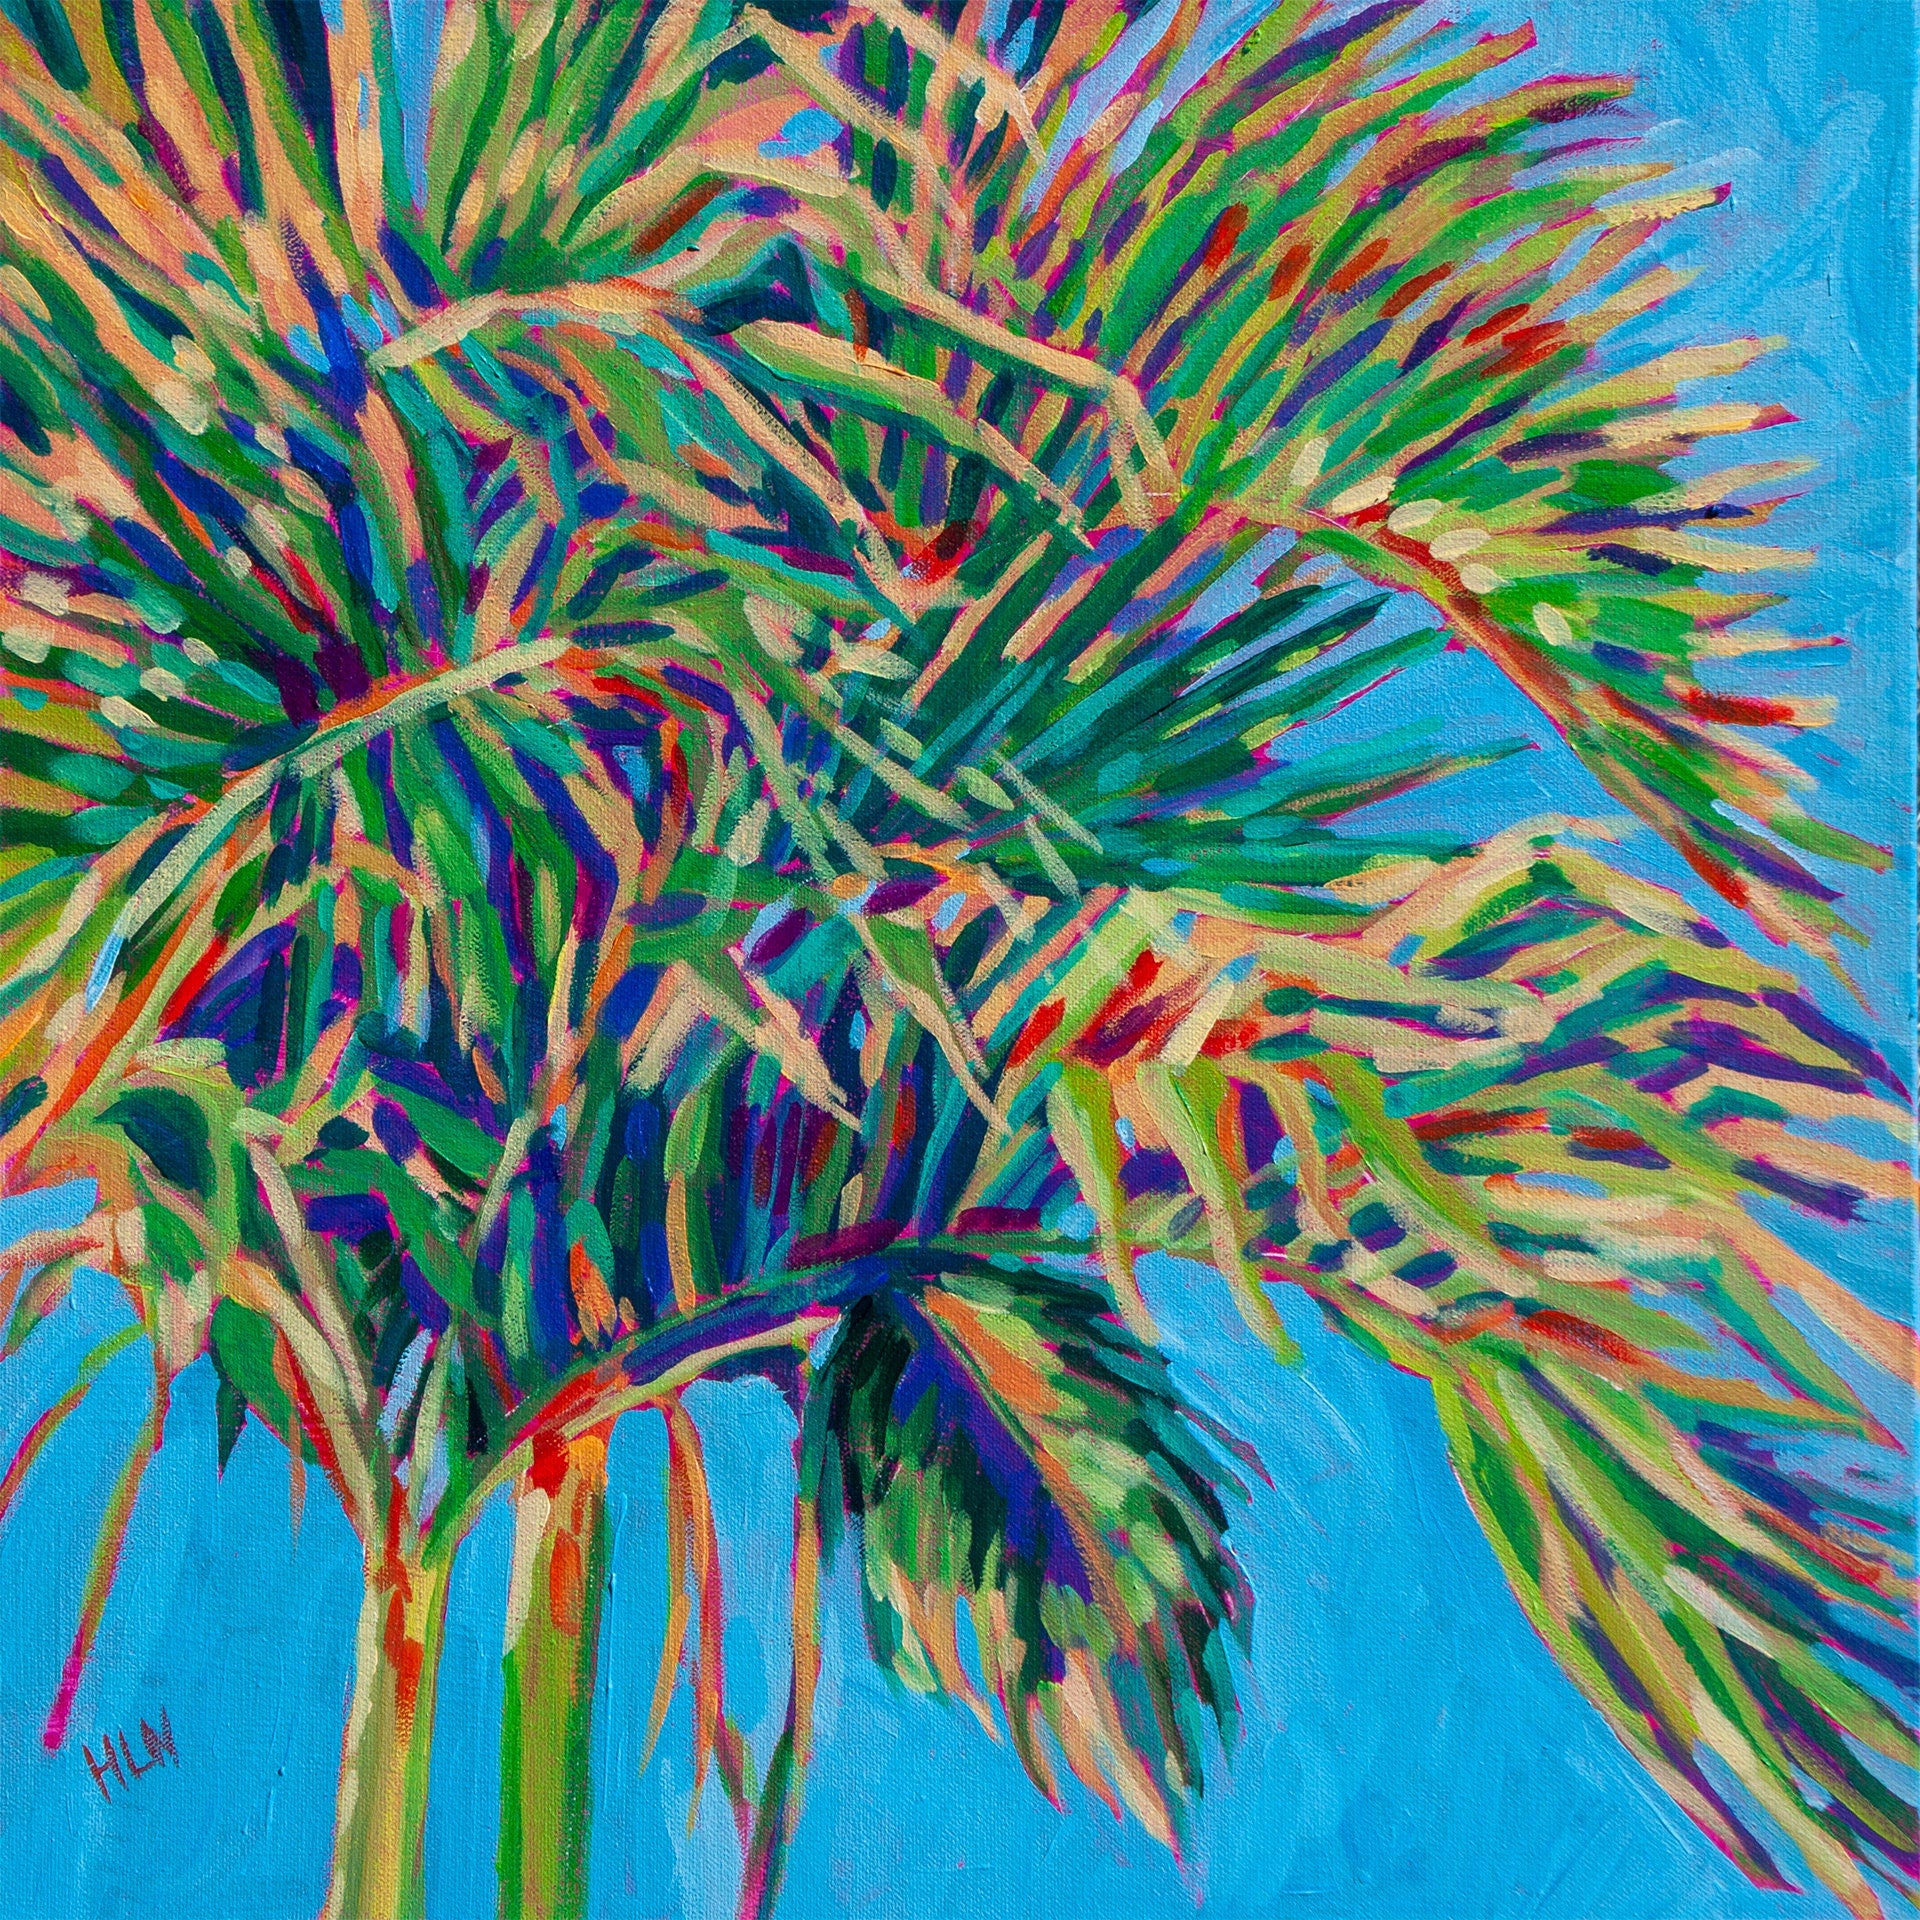 Vibrant painting of Christmas tree palm